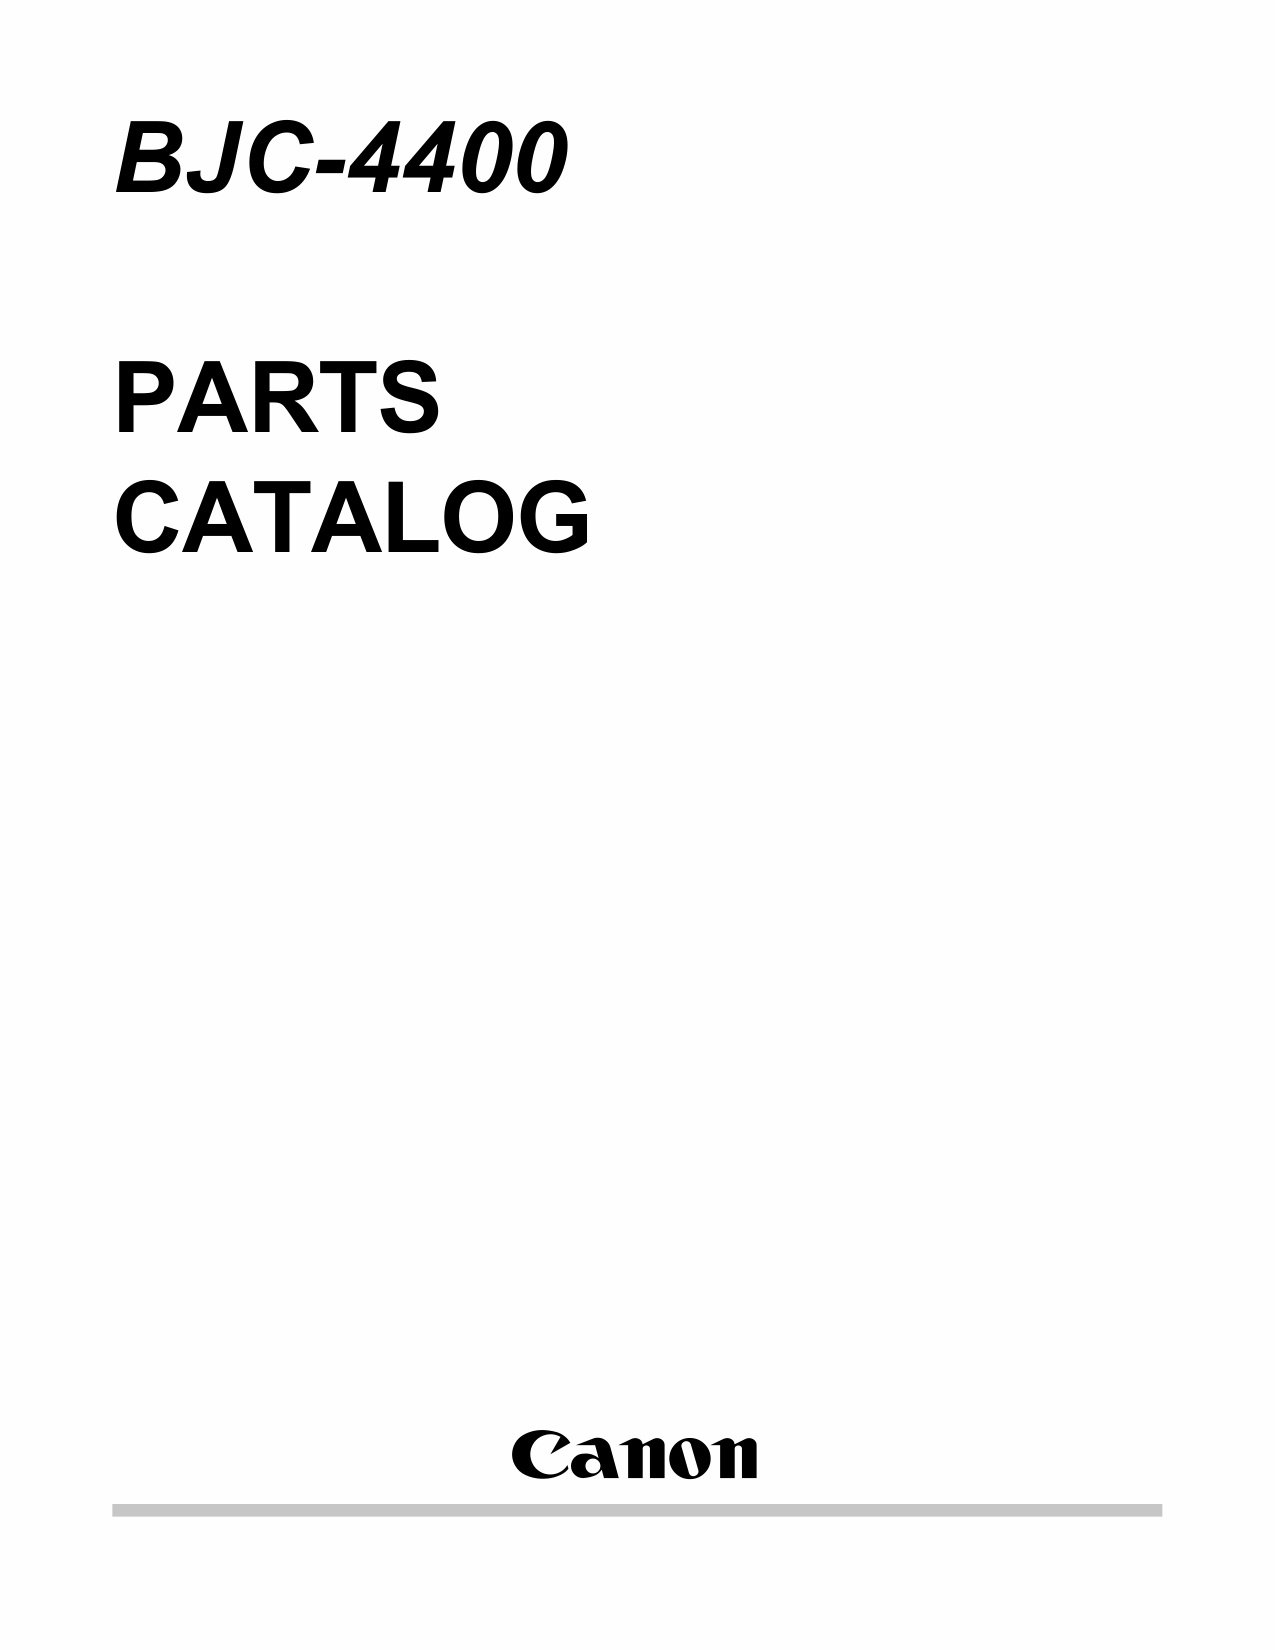 Canon BubbleJet BJC-4400 Parts Catalog Manual-1